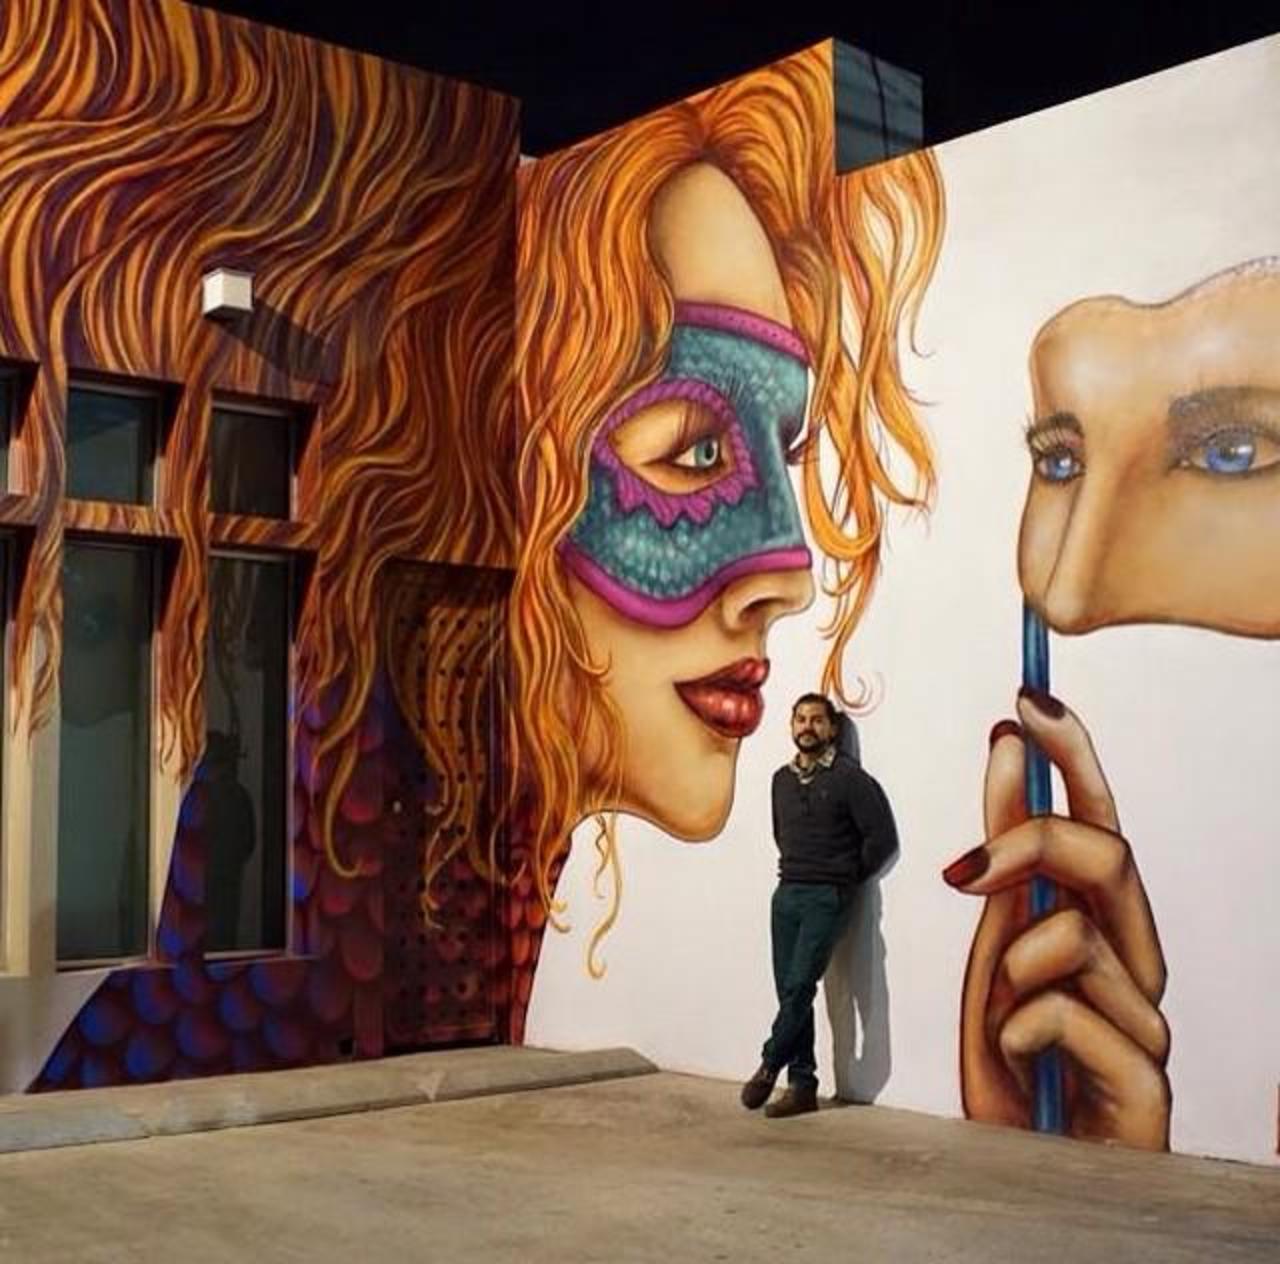 “@GoogleStreetArt: Wonderful Street Art work by Libre Hem in Tijuana, Mexico 

#art #graffiti #mural #streetart http://t.co/LNtV0o8hFF”